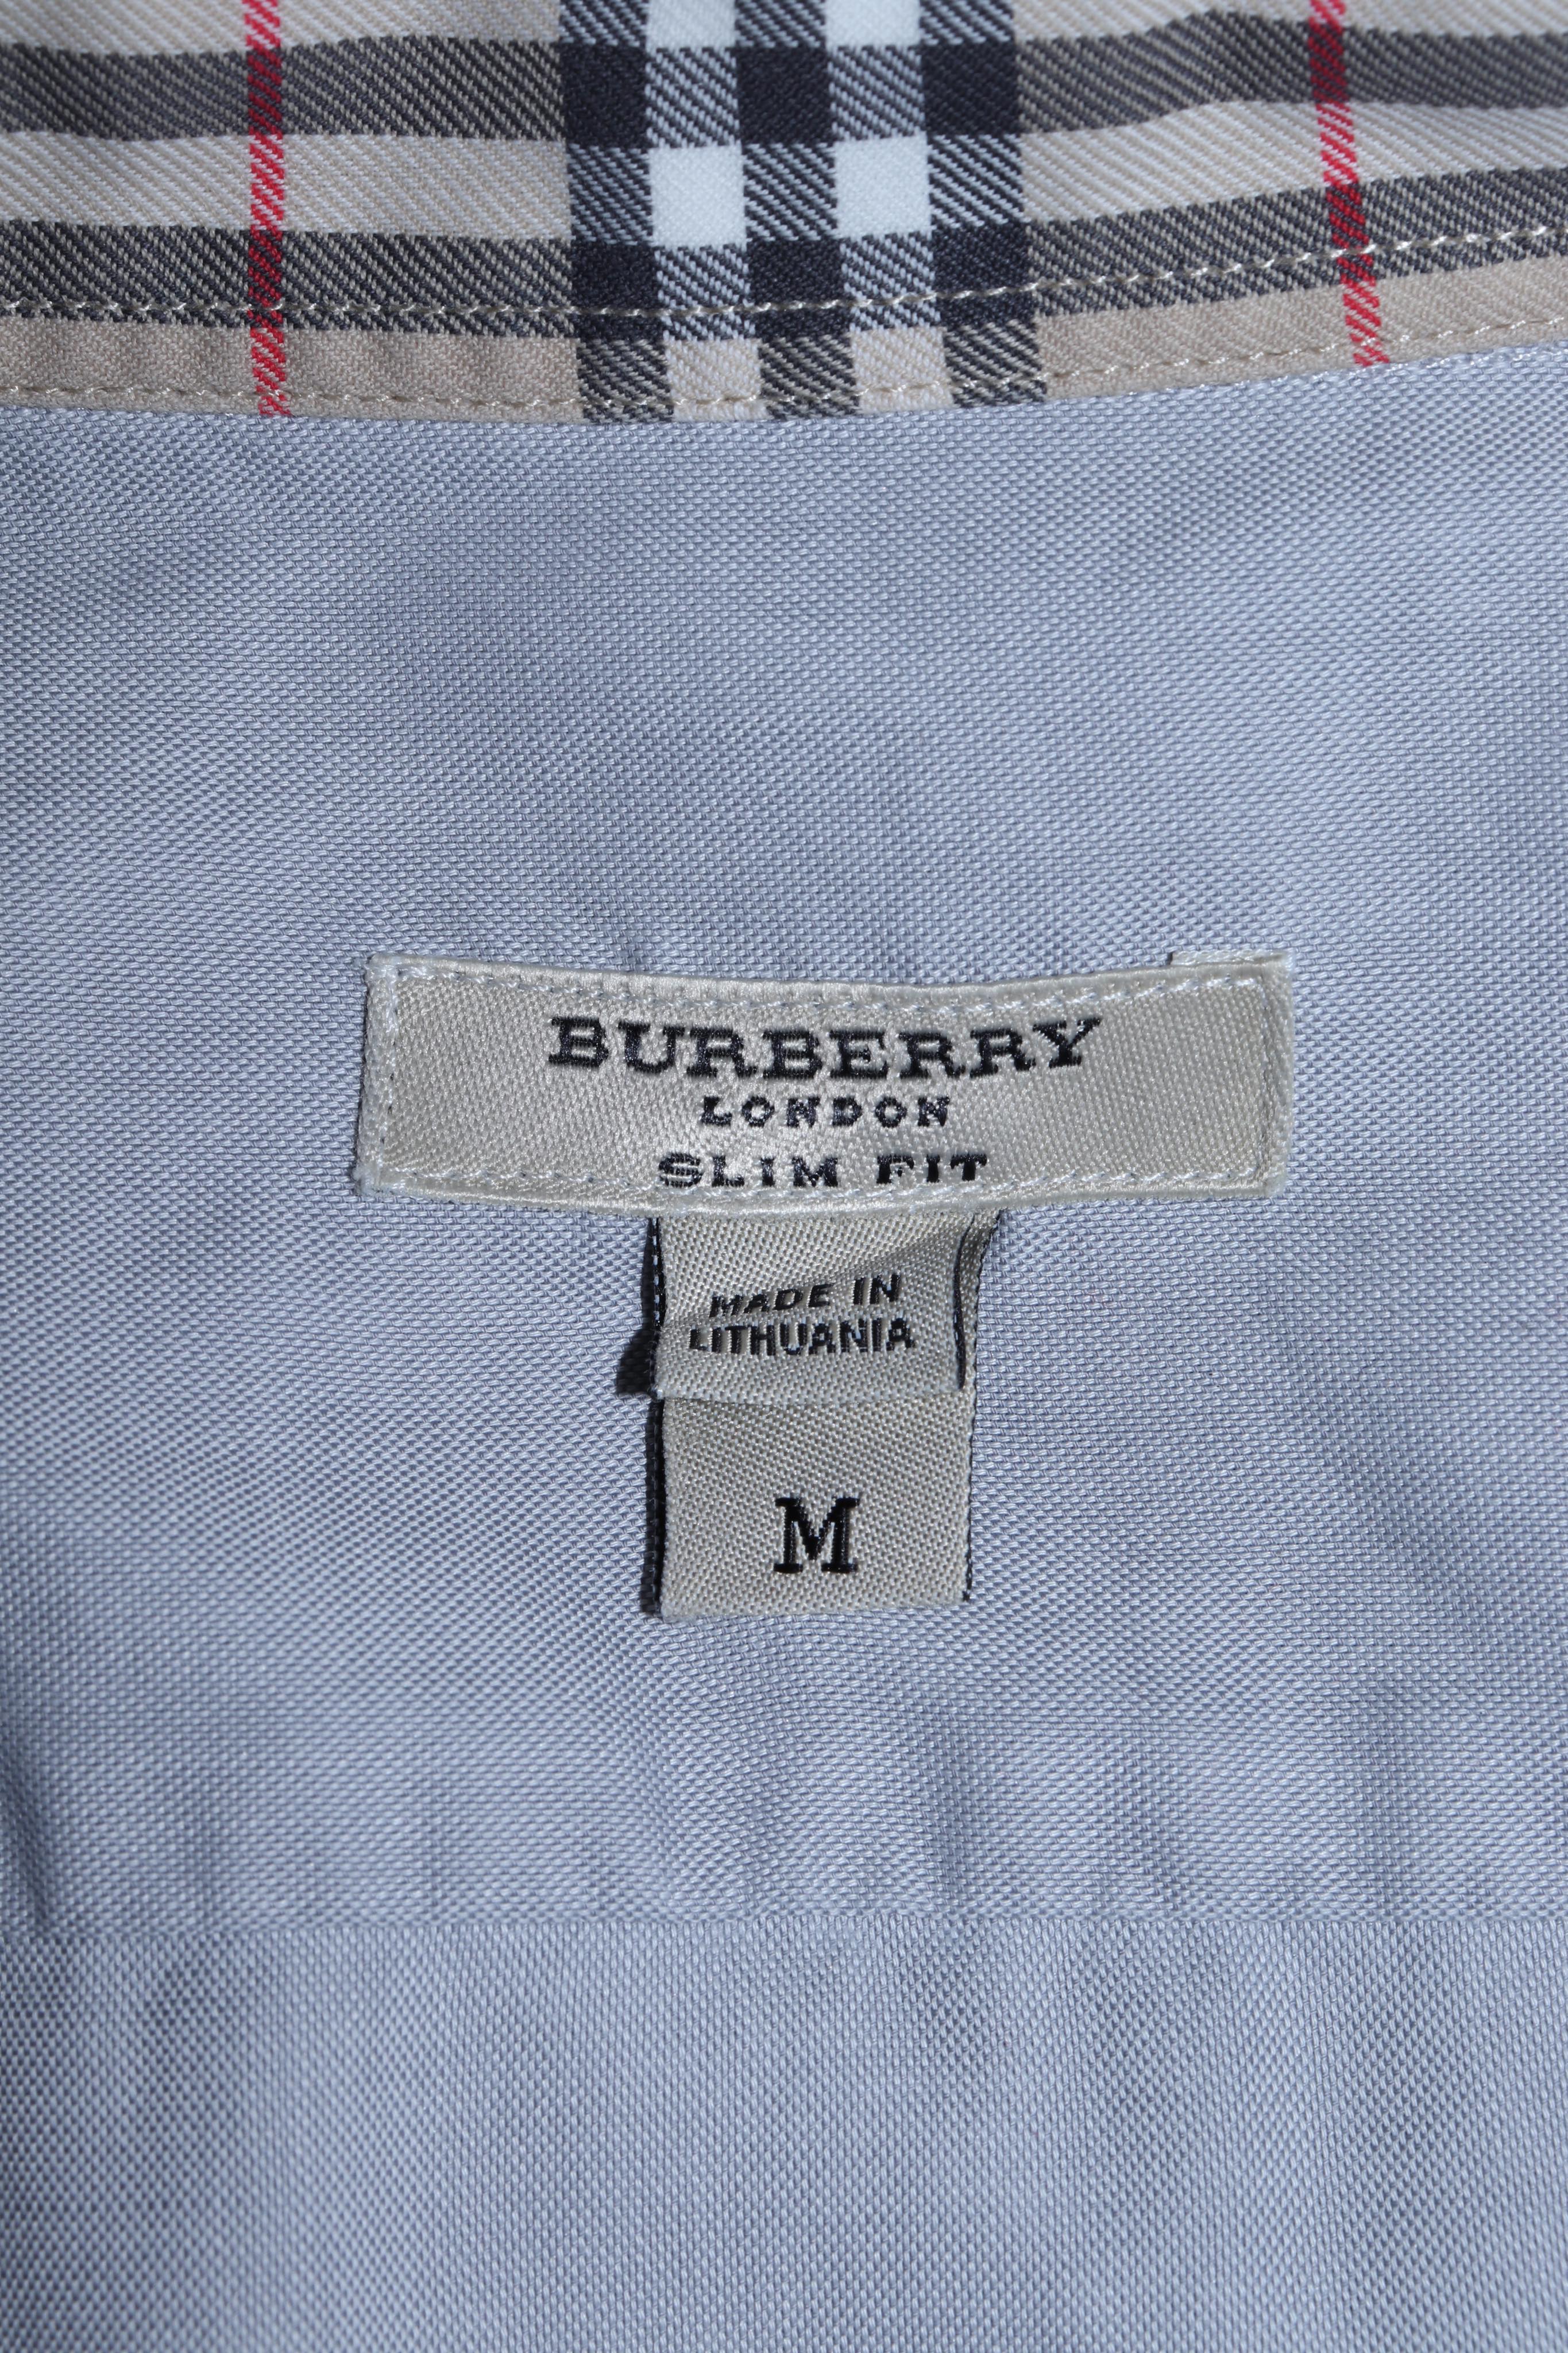 Burberry London Embroidered Logo Dress Shirt